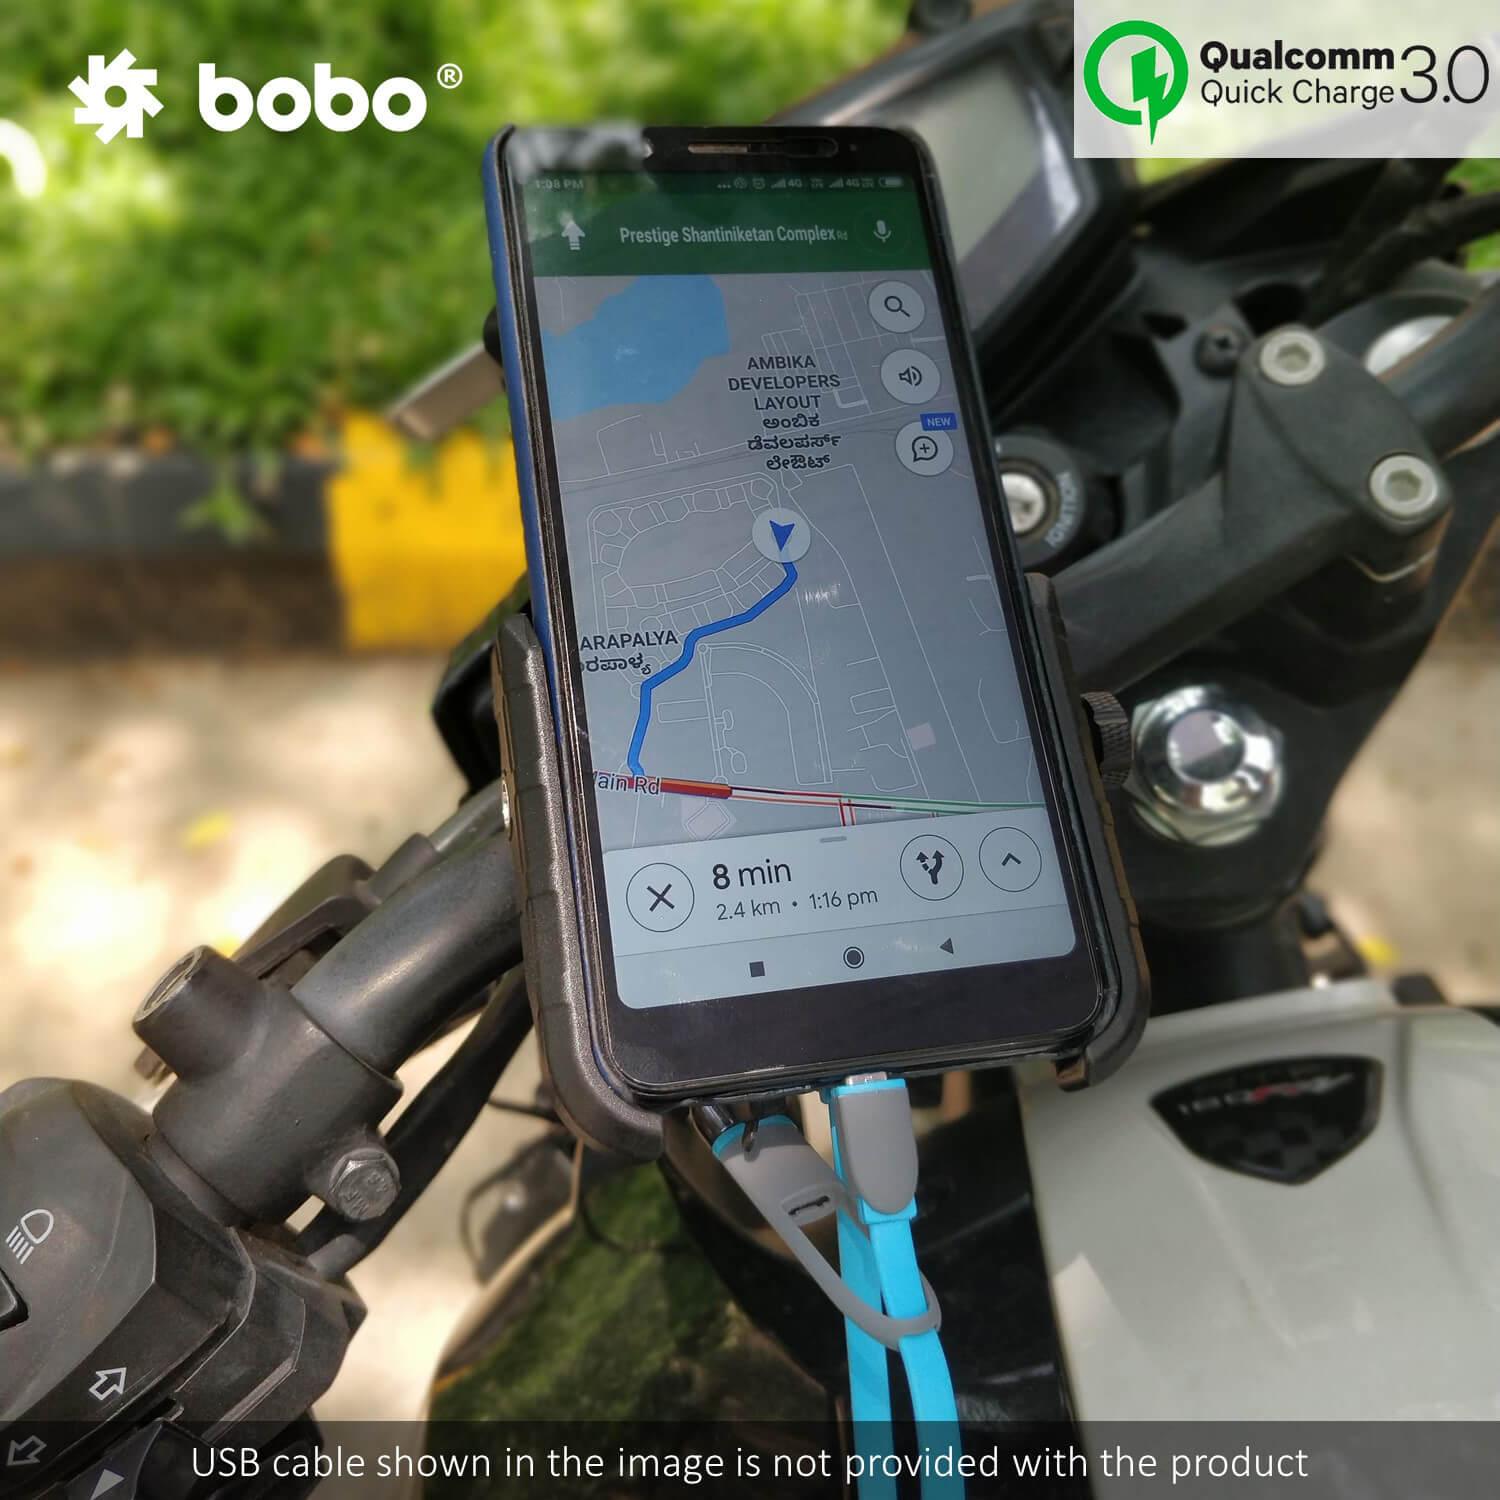 BOBO BM1 Jaw-Grip Bike Phone Holder (with fast USB 3.0 charger) - Autosparz